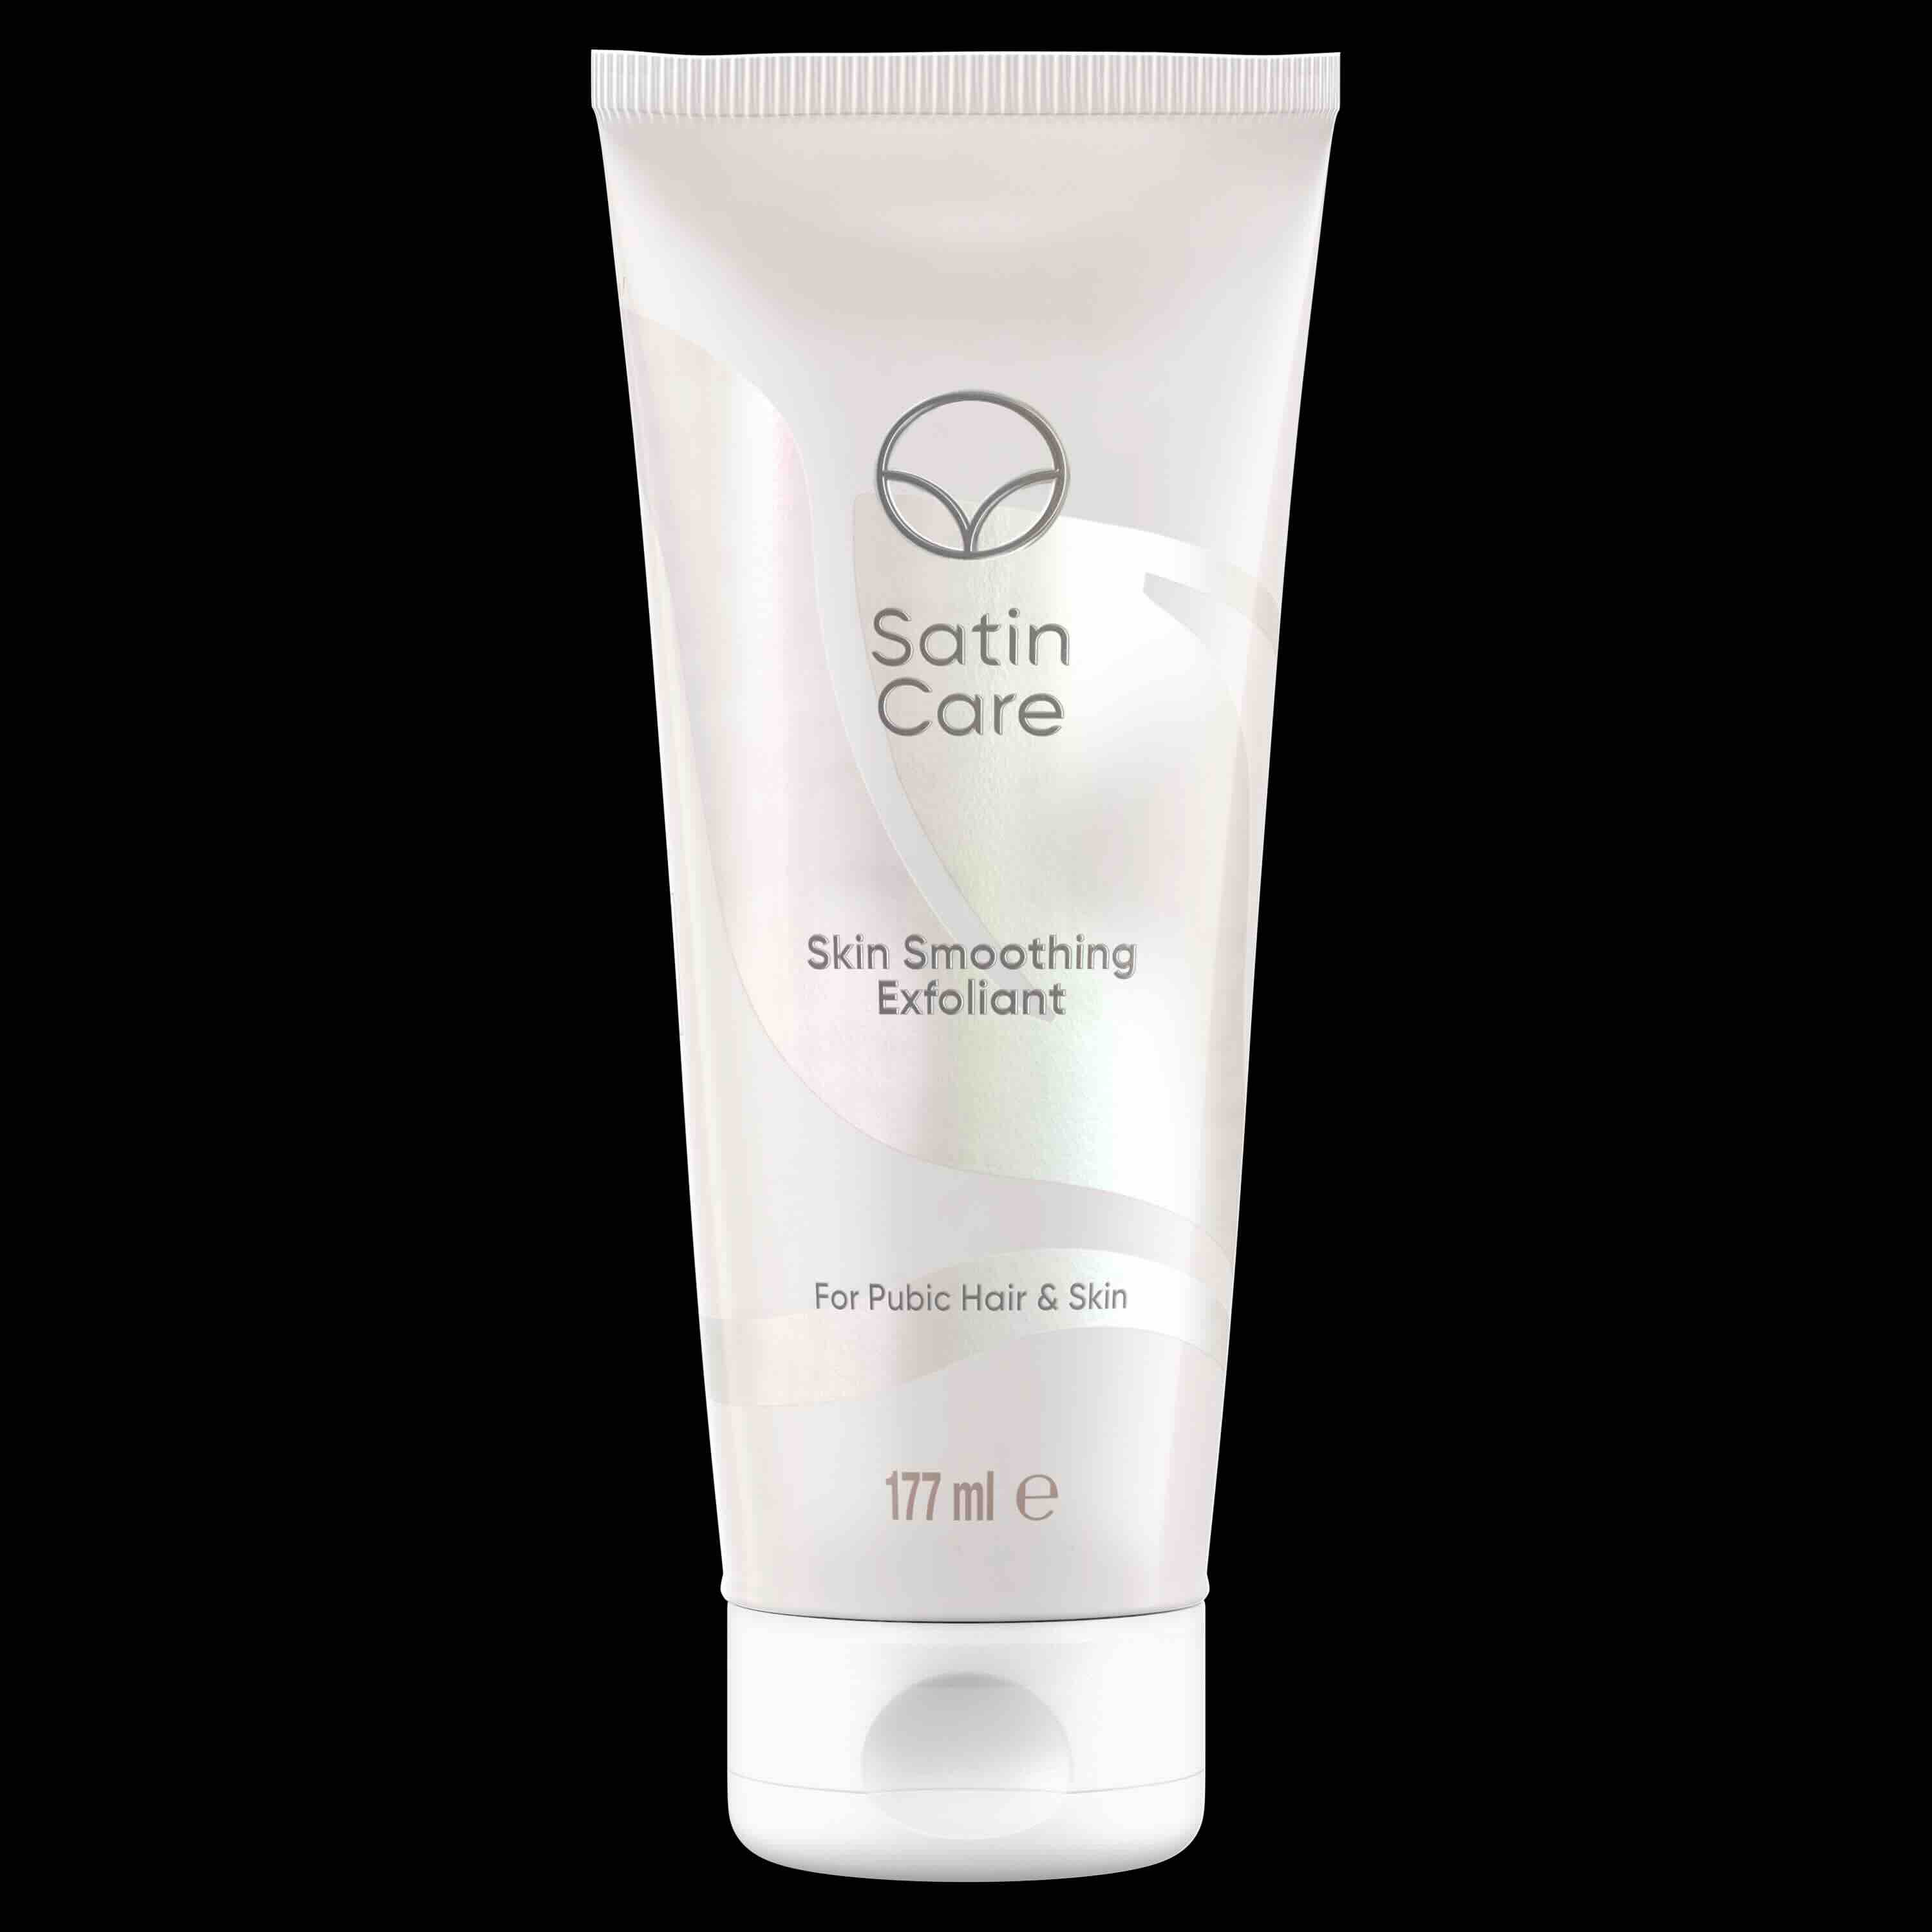 Satin Care Skin smoothing exfoliant 177ml